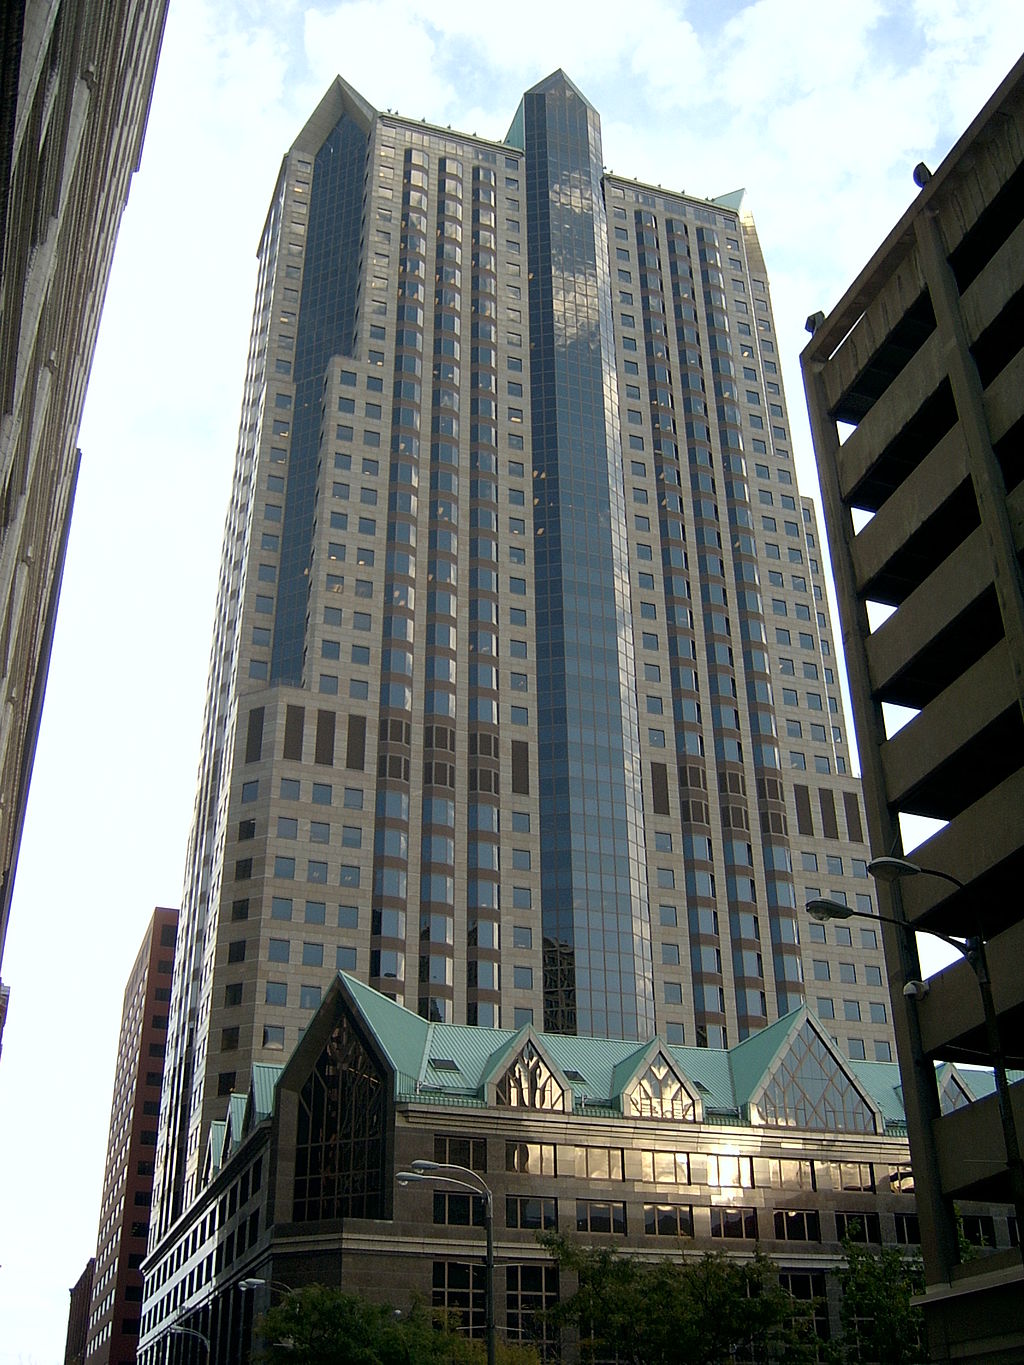 Downtown St. Louis - Wikipedia